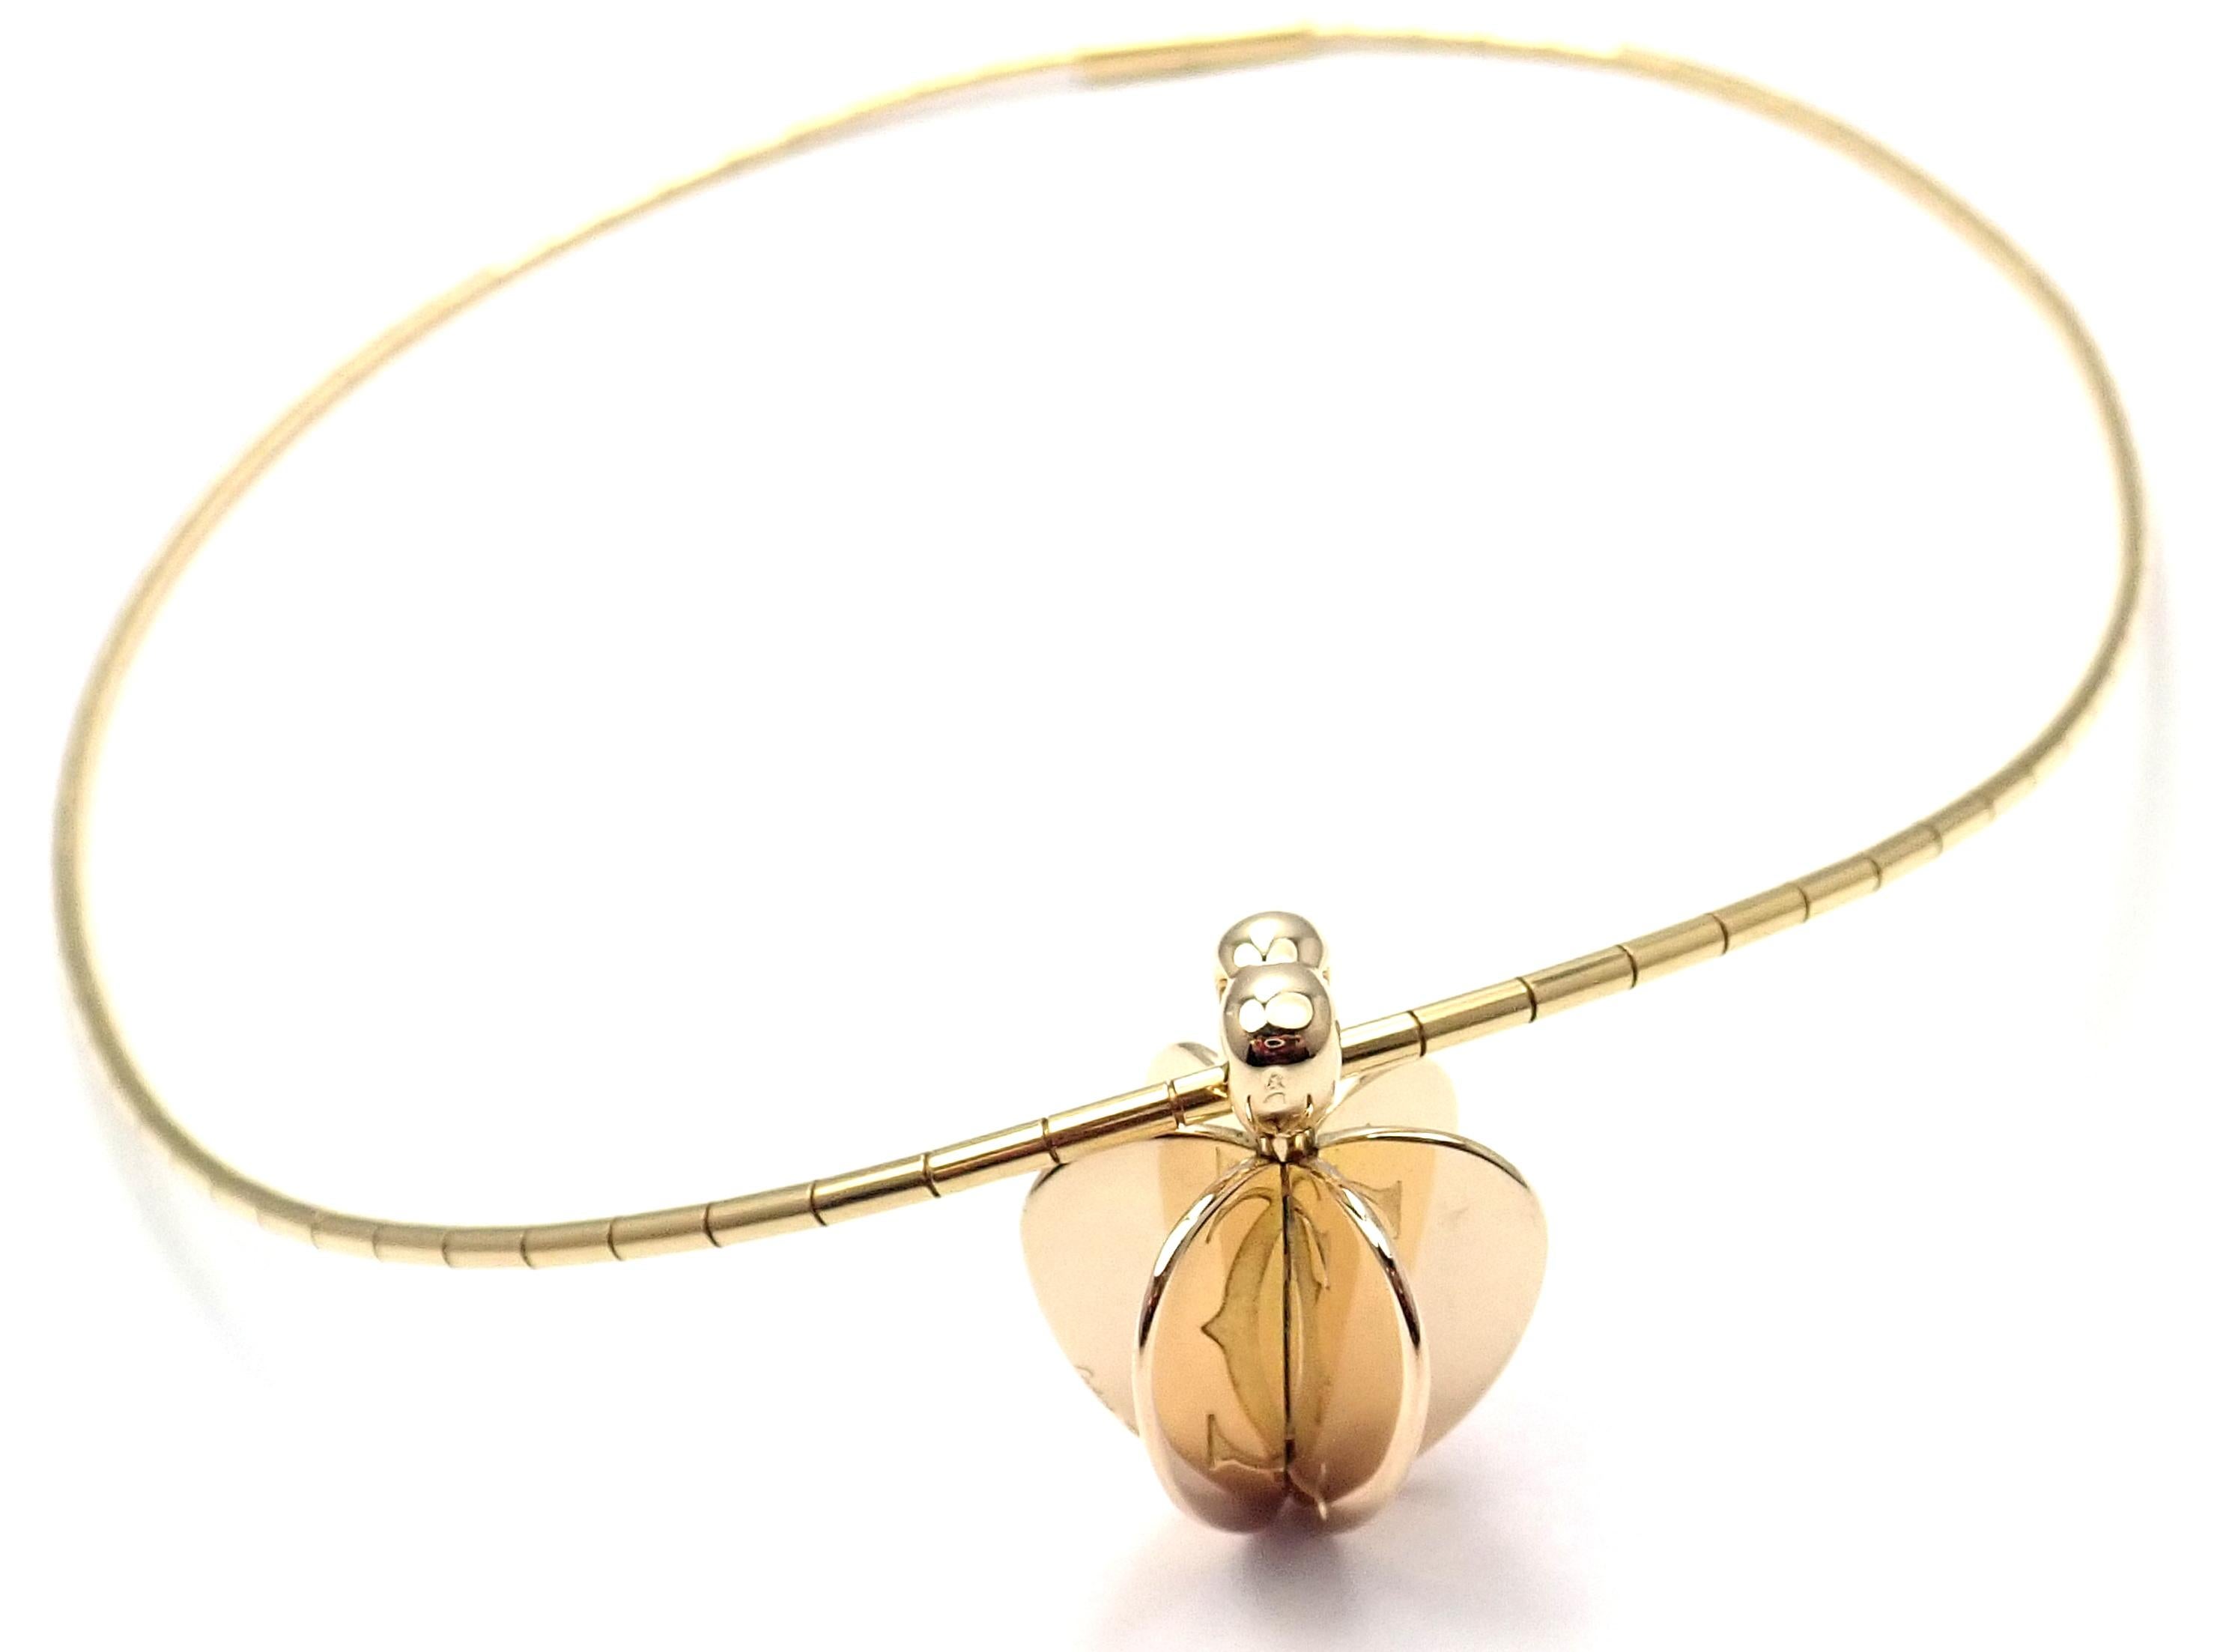 18k Yellow Gold Double C Apple Heart Pendant Necklace by Cartier. 
Details: 
Pendant: 27mm x 20mm
Chain: Length: 15.5